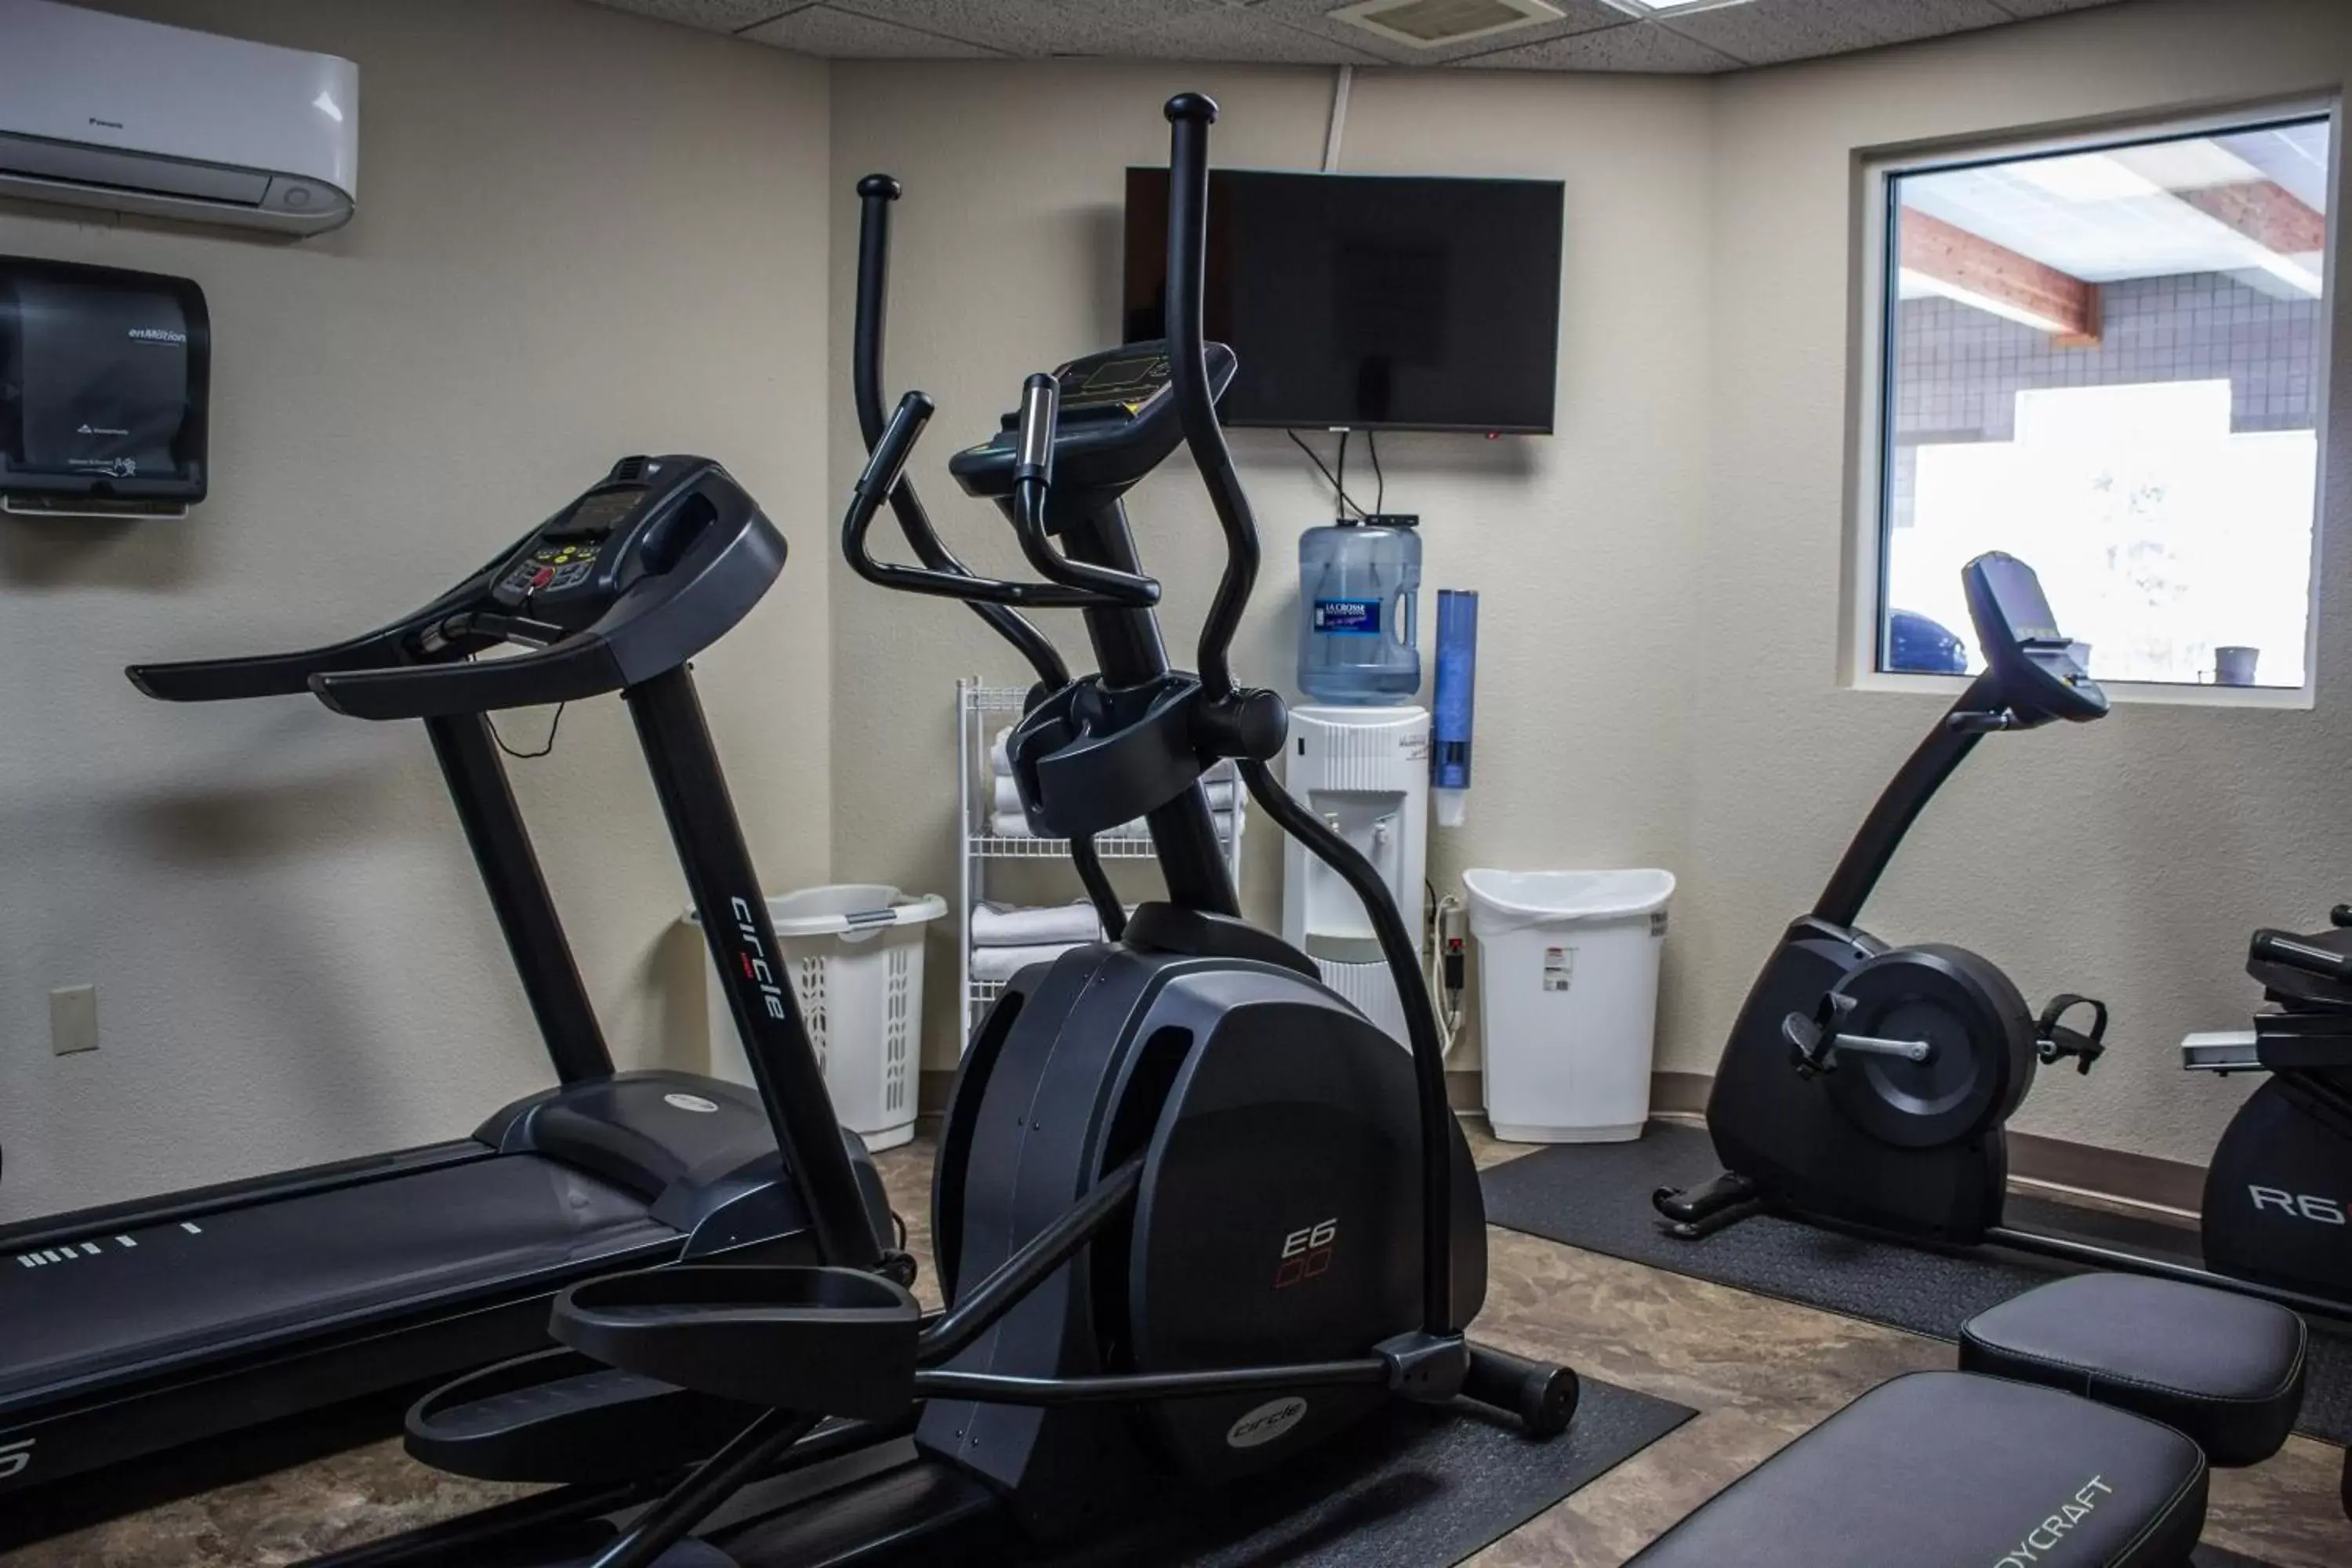 Fitness centre/facilities, Fitness Center/Facilities in Cobblestone Suites - Oshkosh